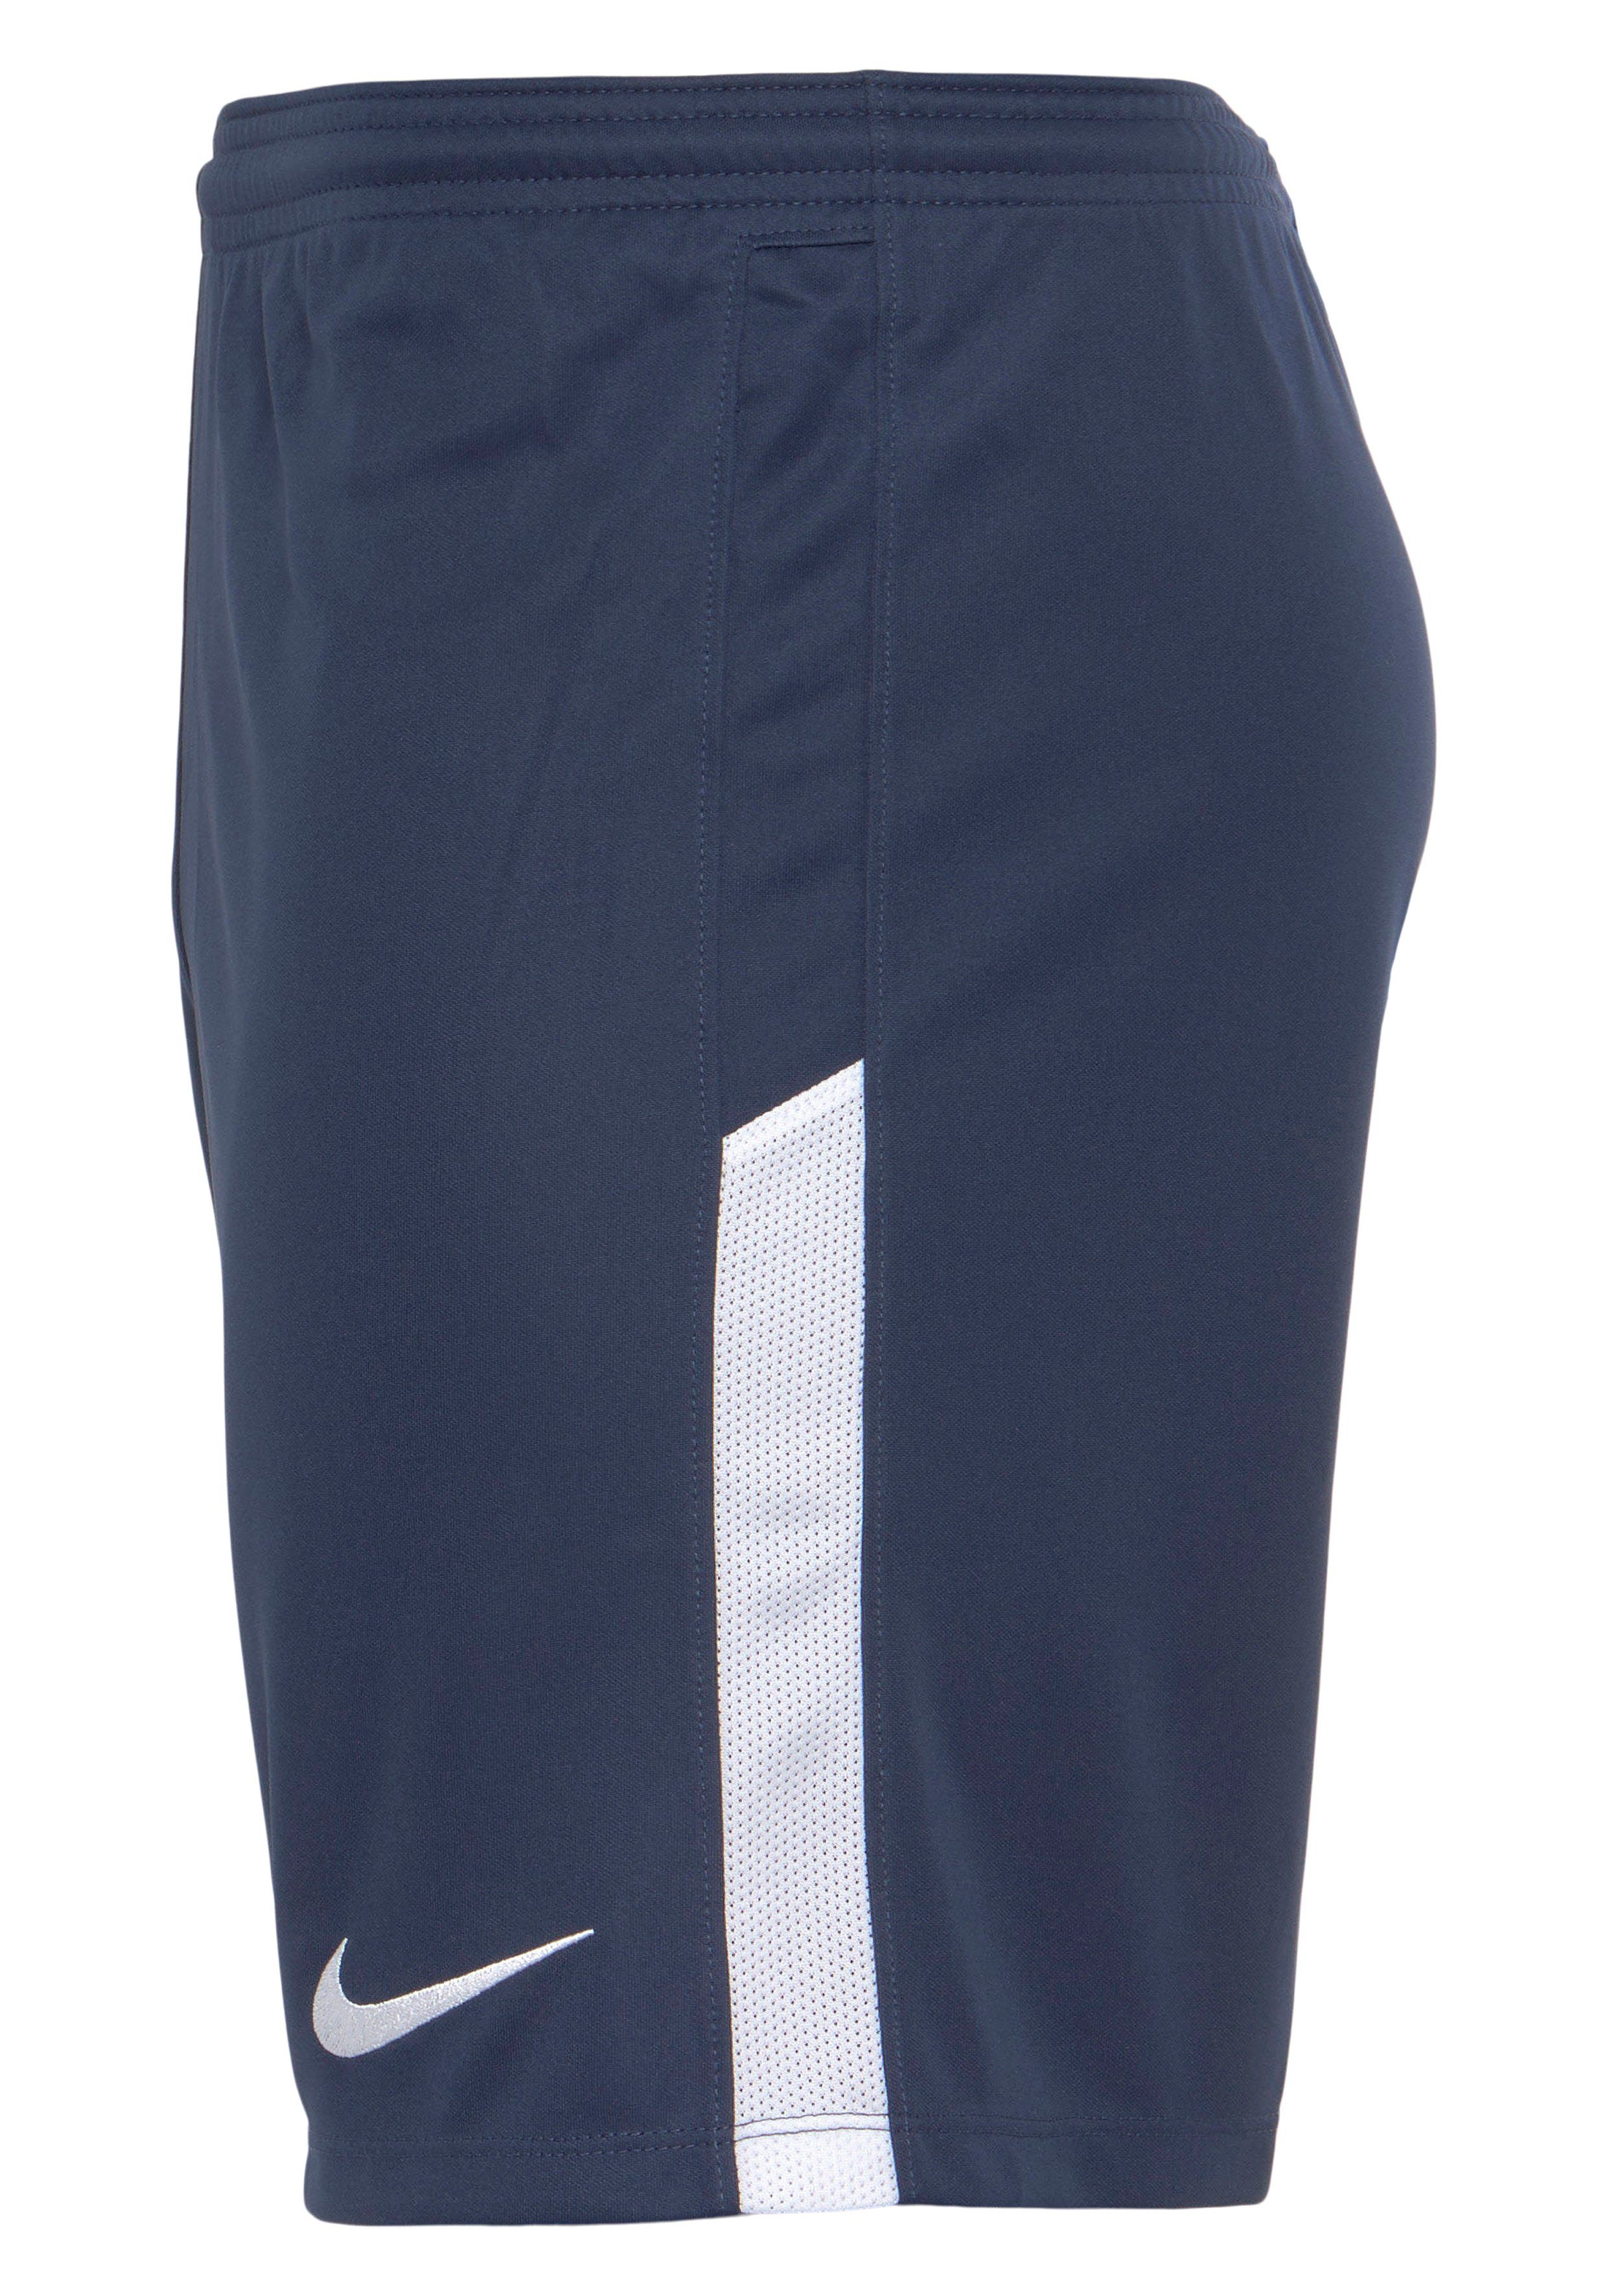 Nike Shorts navy League Short Knit Nike